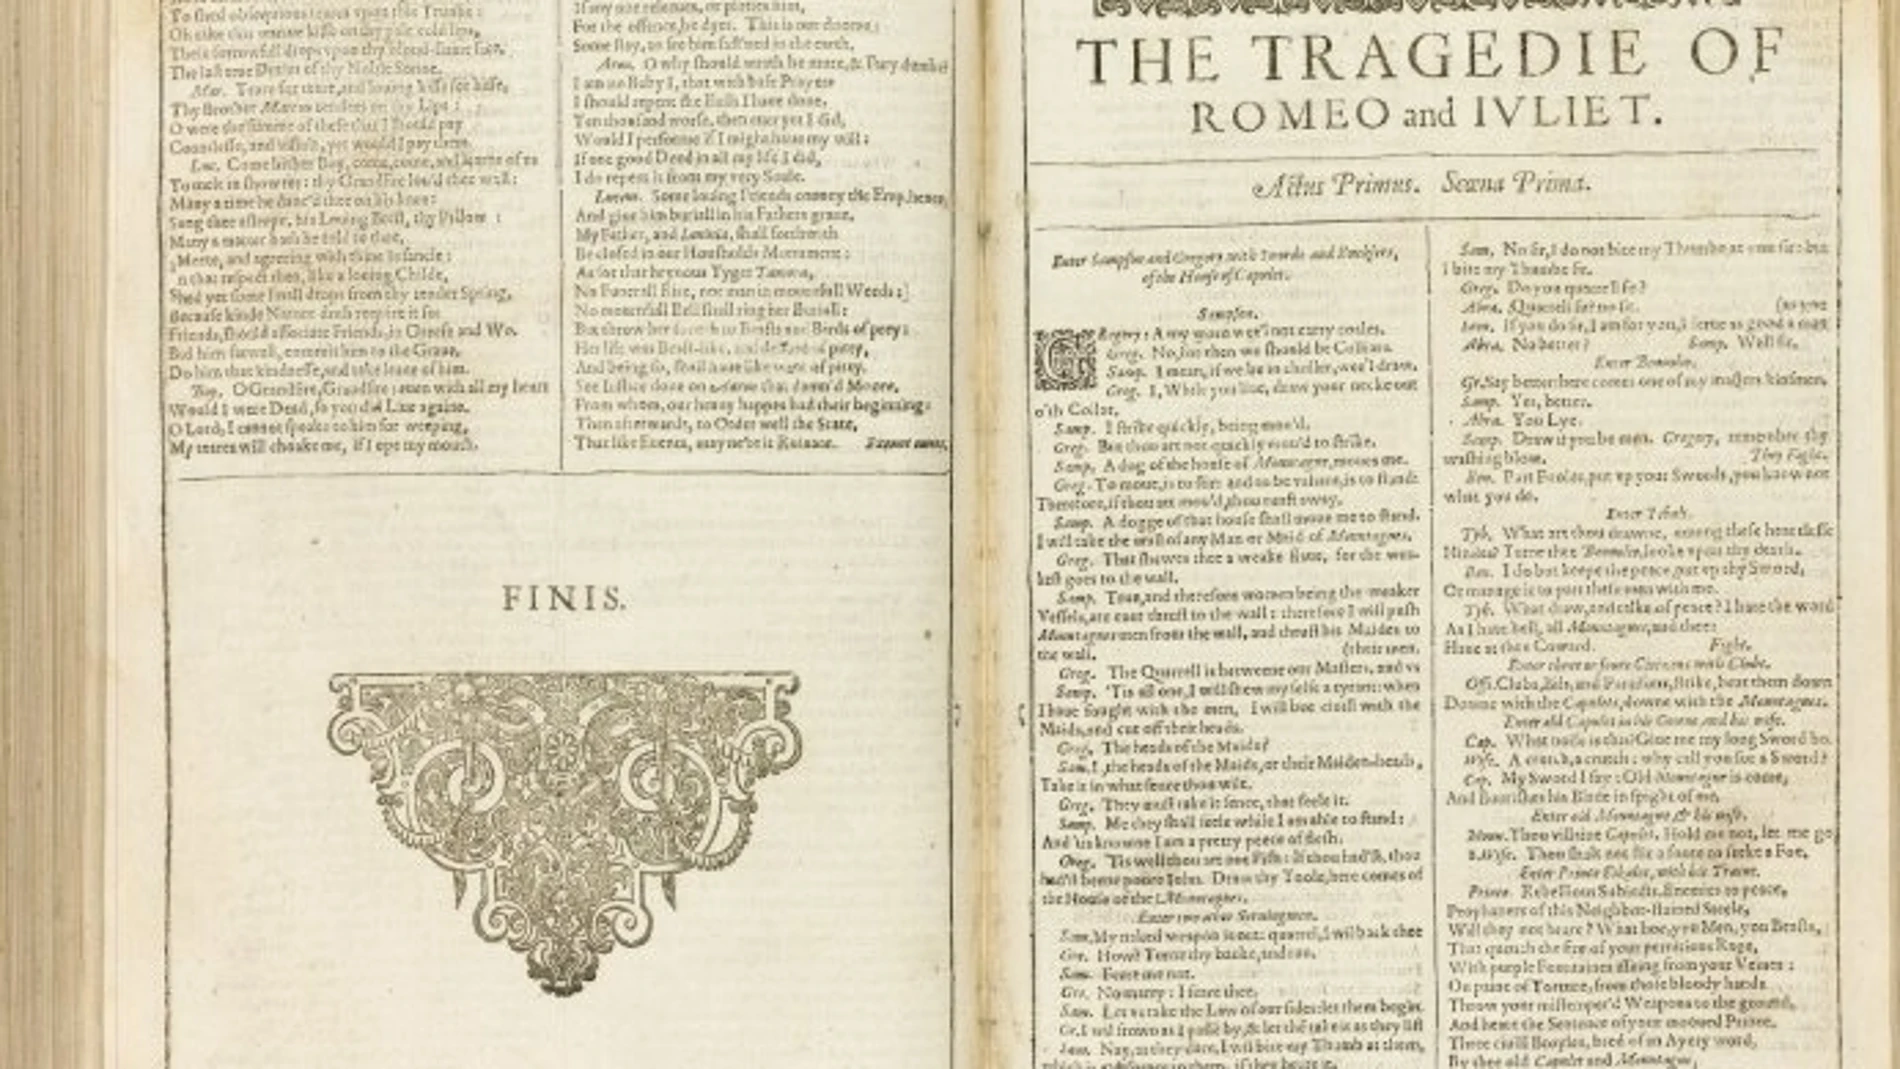 "La tragedia de Romeo y Julieta", de William Shakespeare.